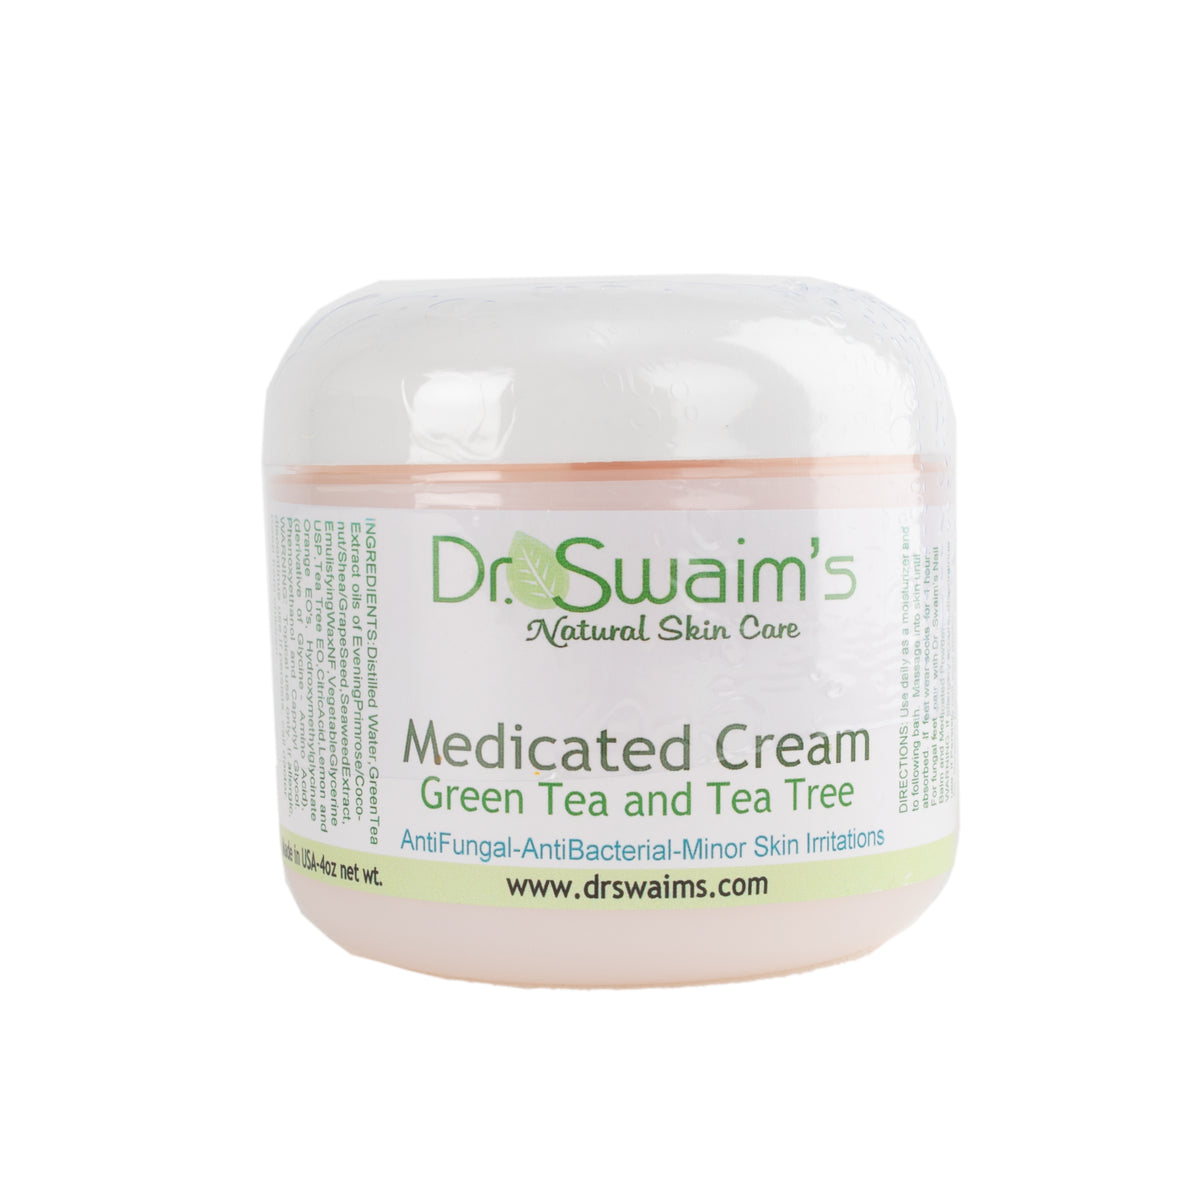 Dr. Swaim's Medicated Cream 4 oz